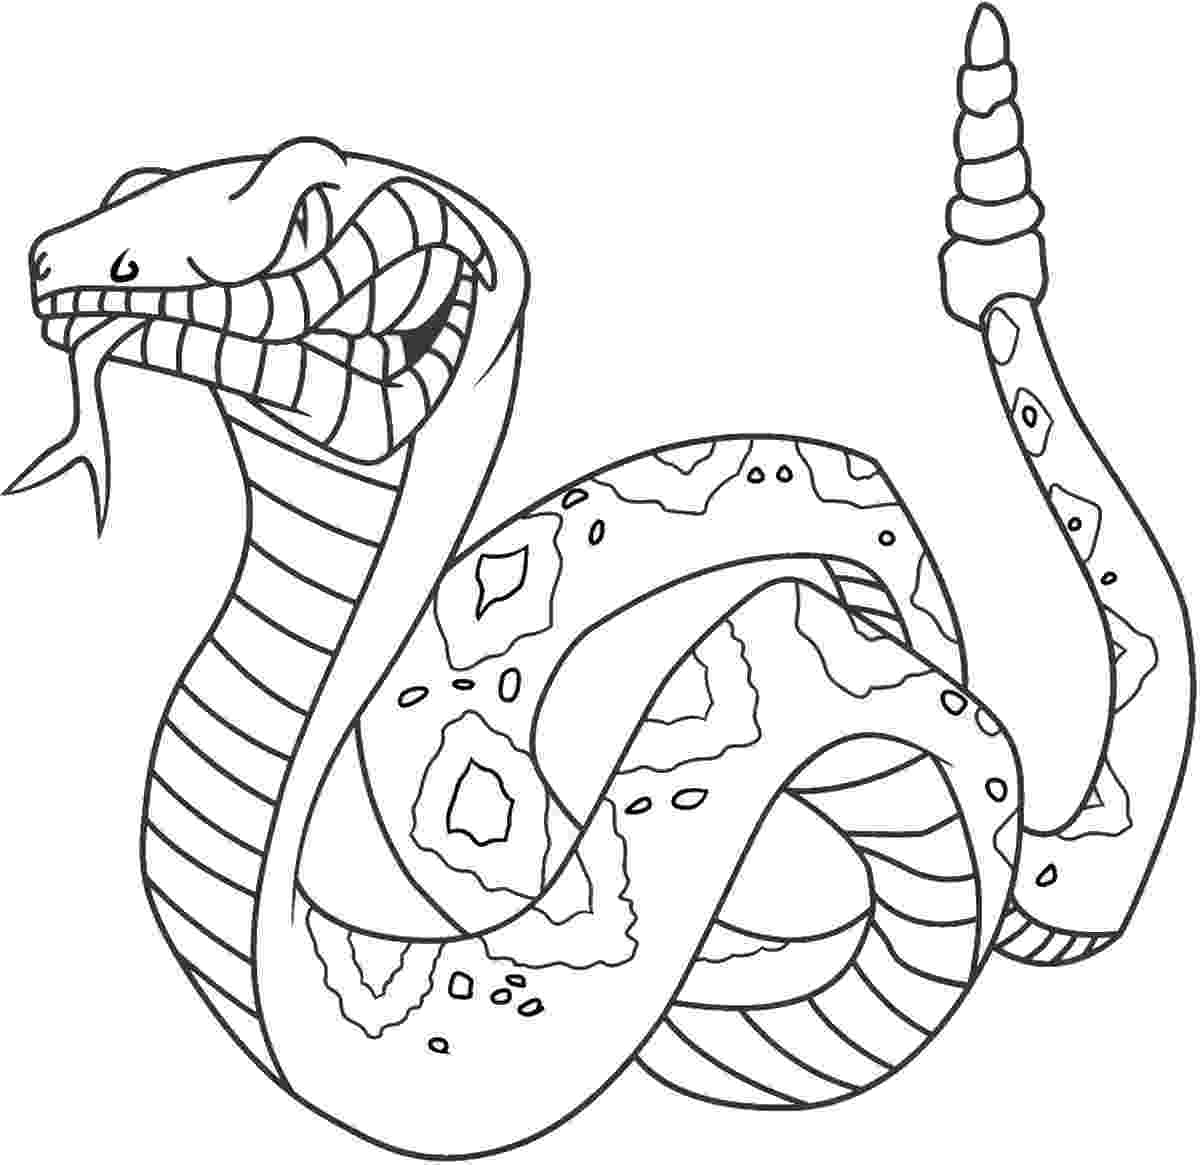 anaconda coloring page free printable snake coloring pages for kids anaconda coloring page 